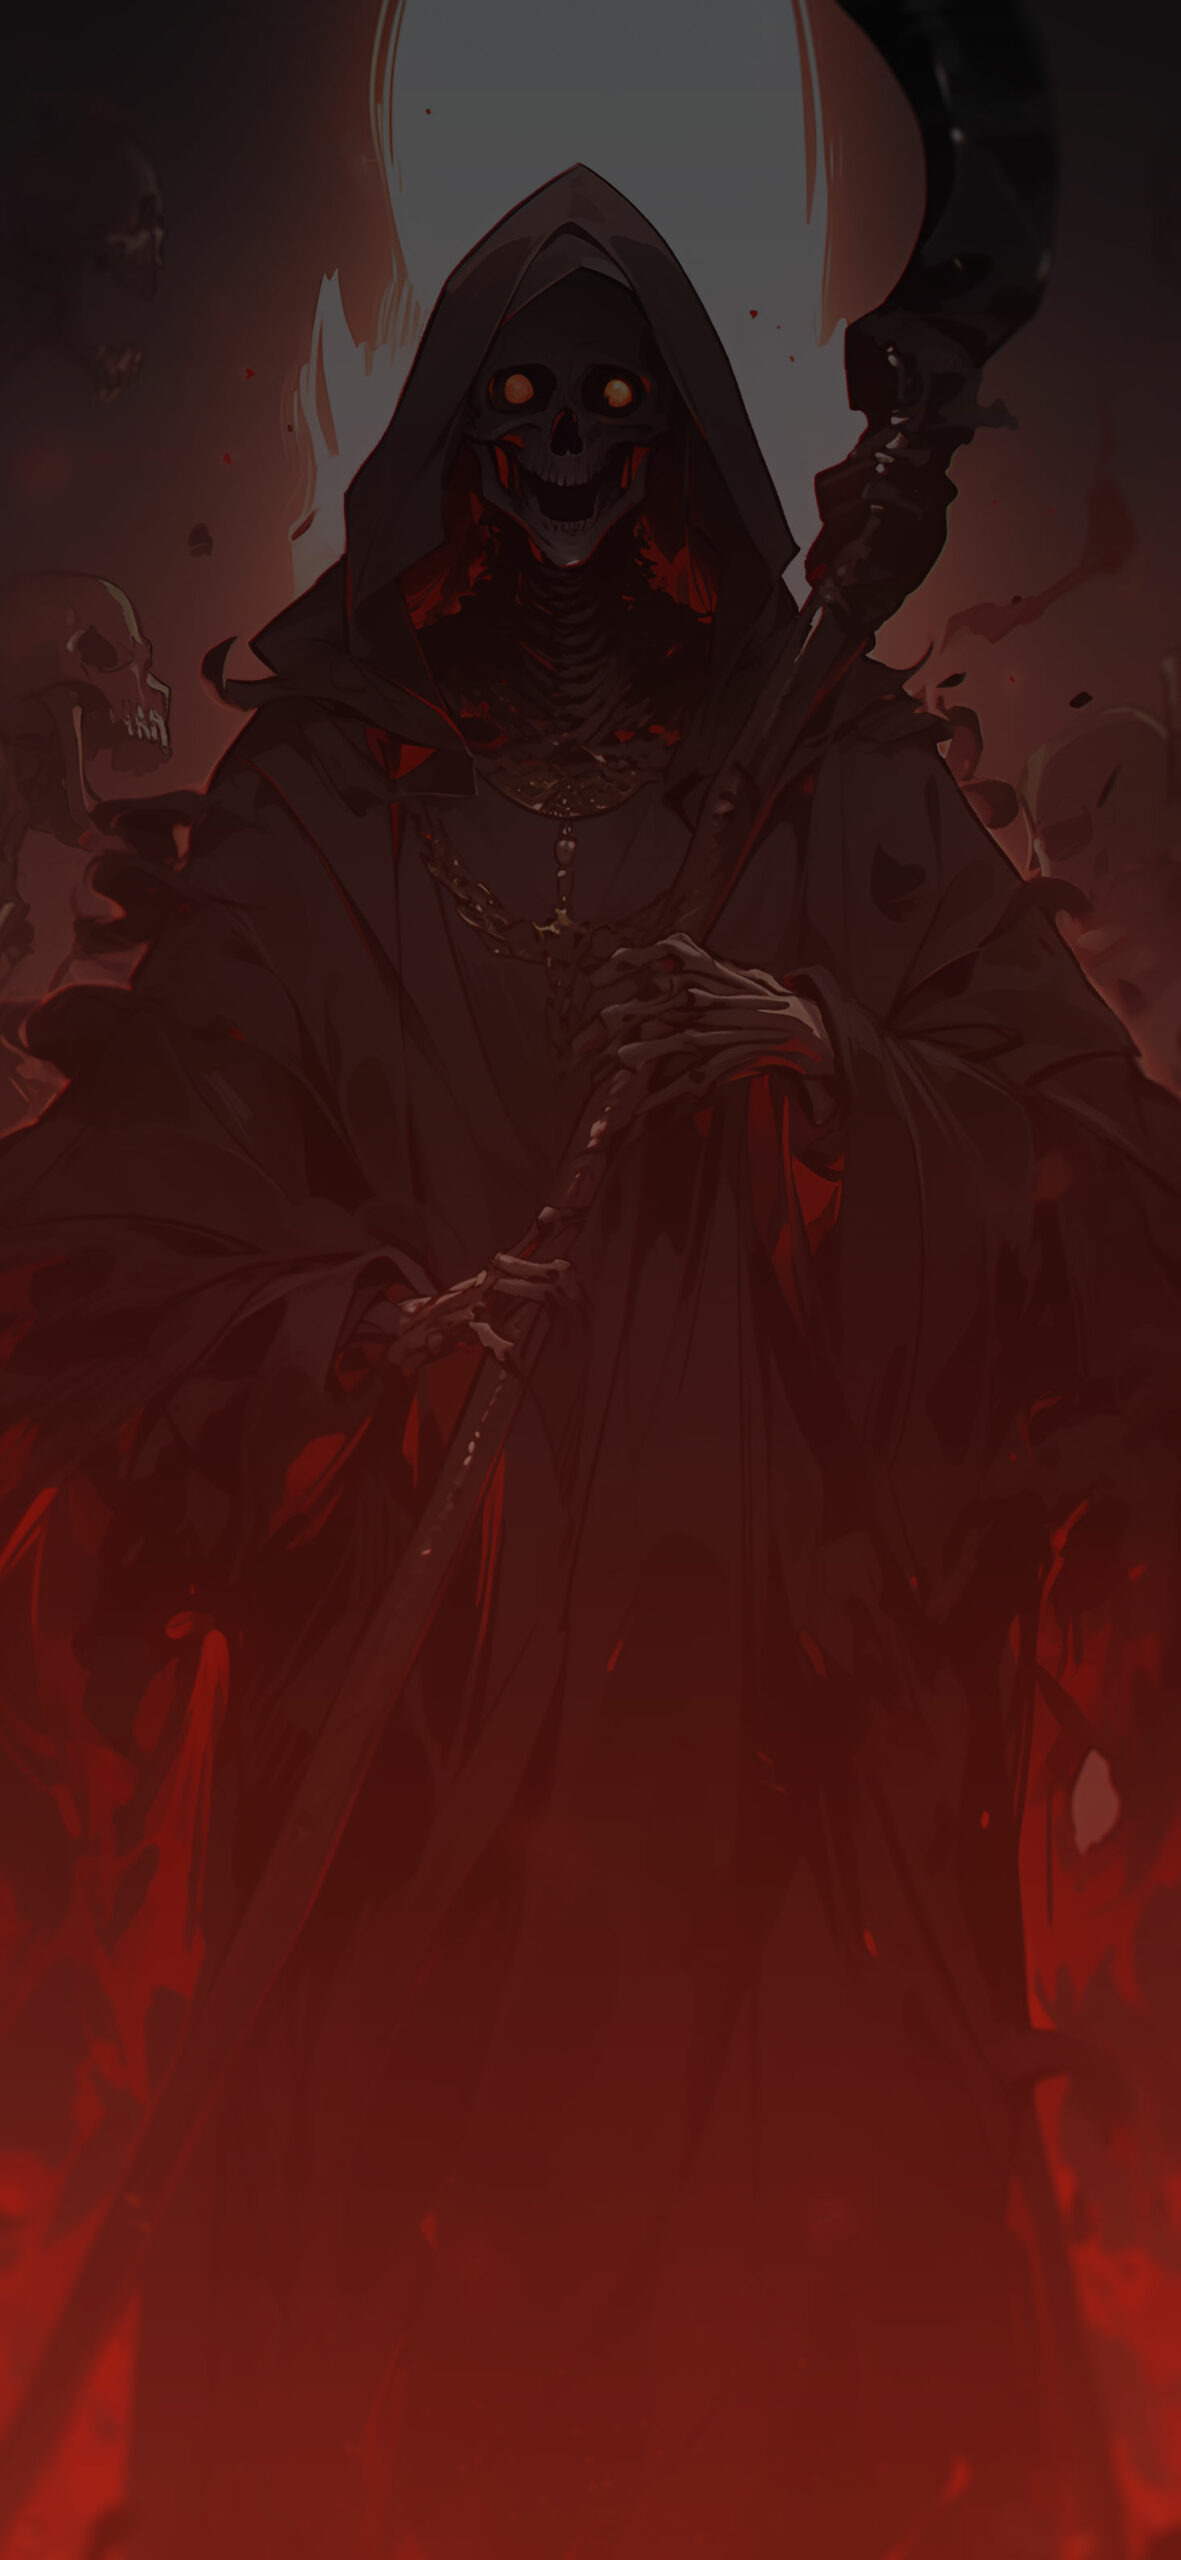 The grim reaper creepy wallpaper Death wallpaper aesthetic 4K